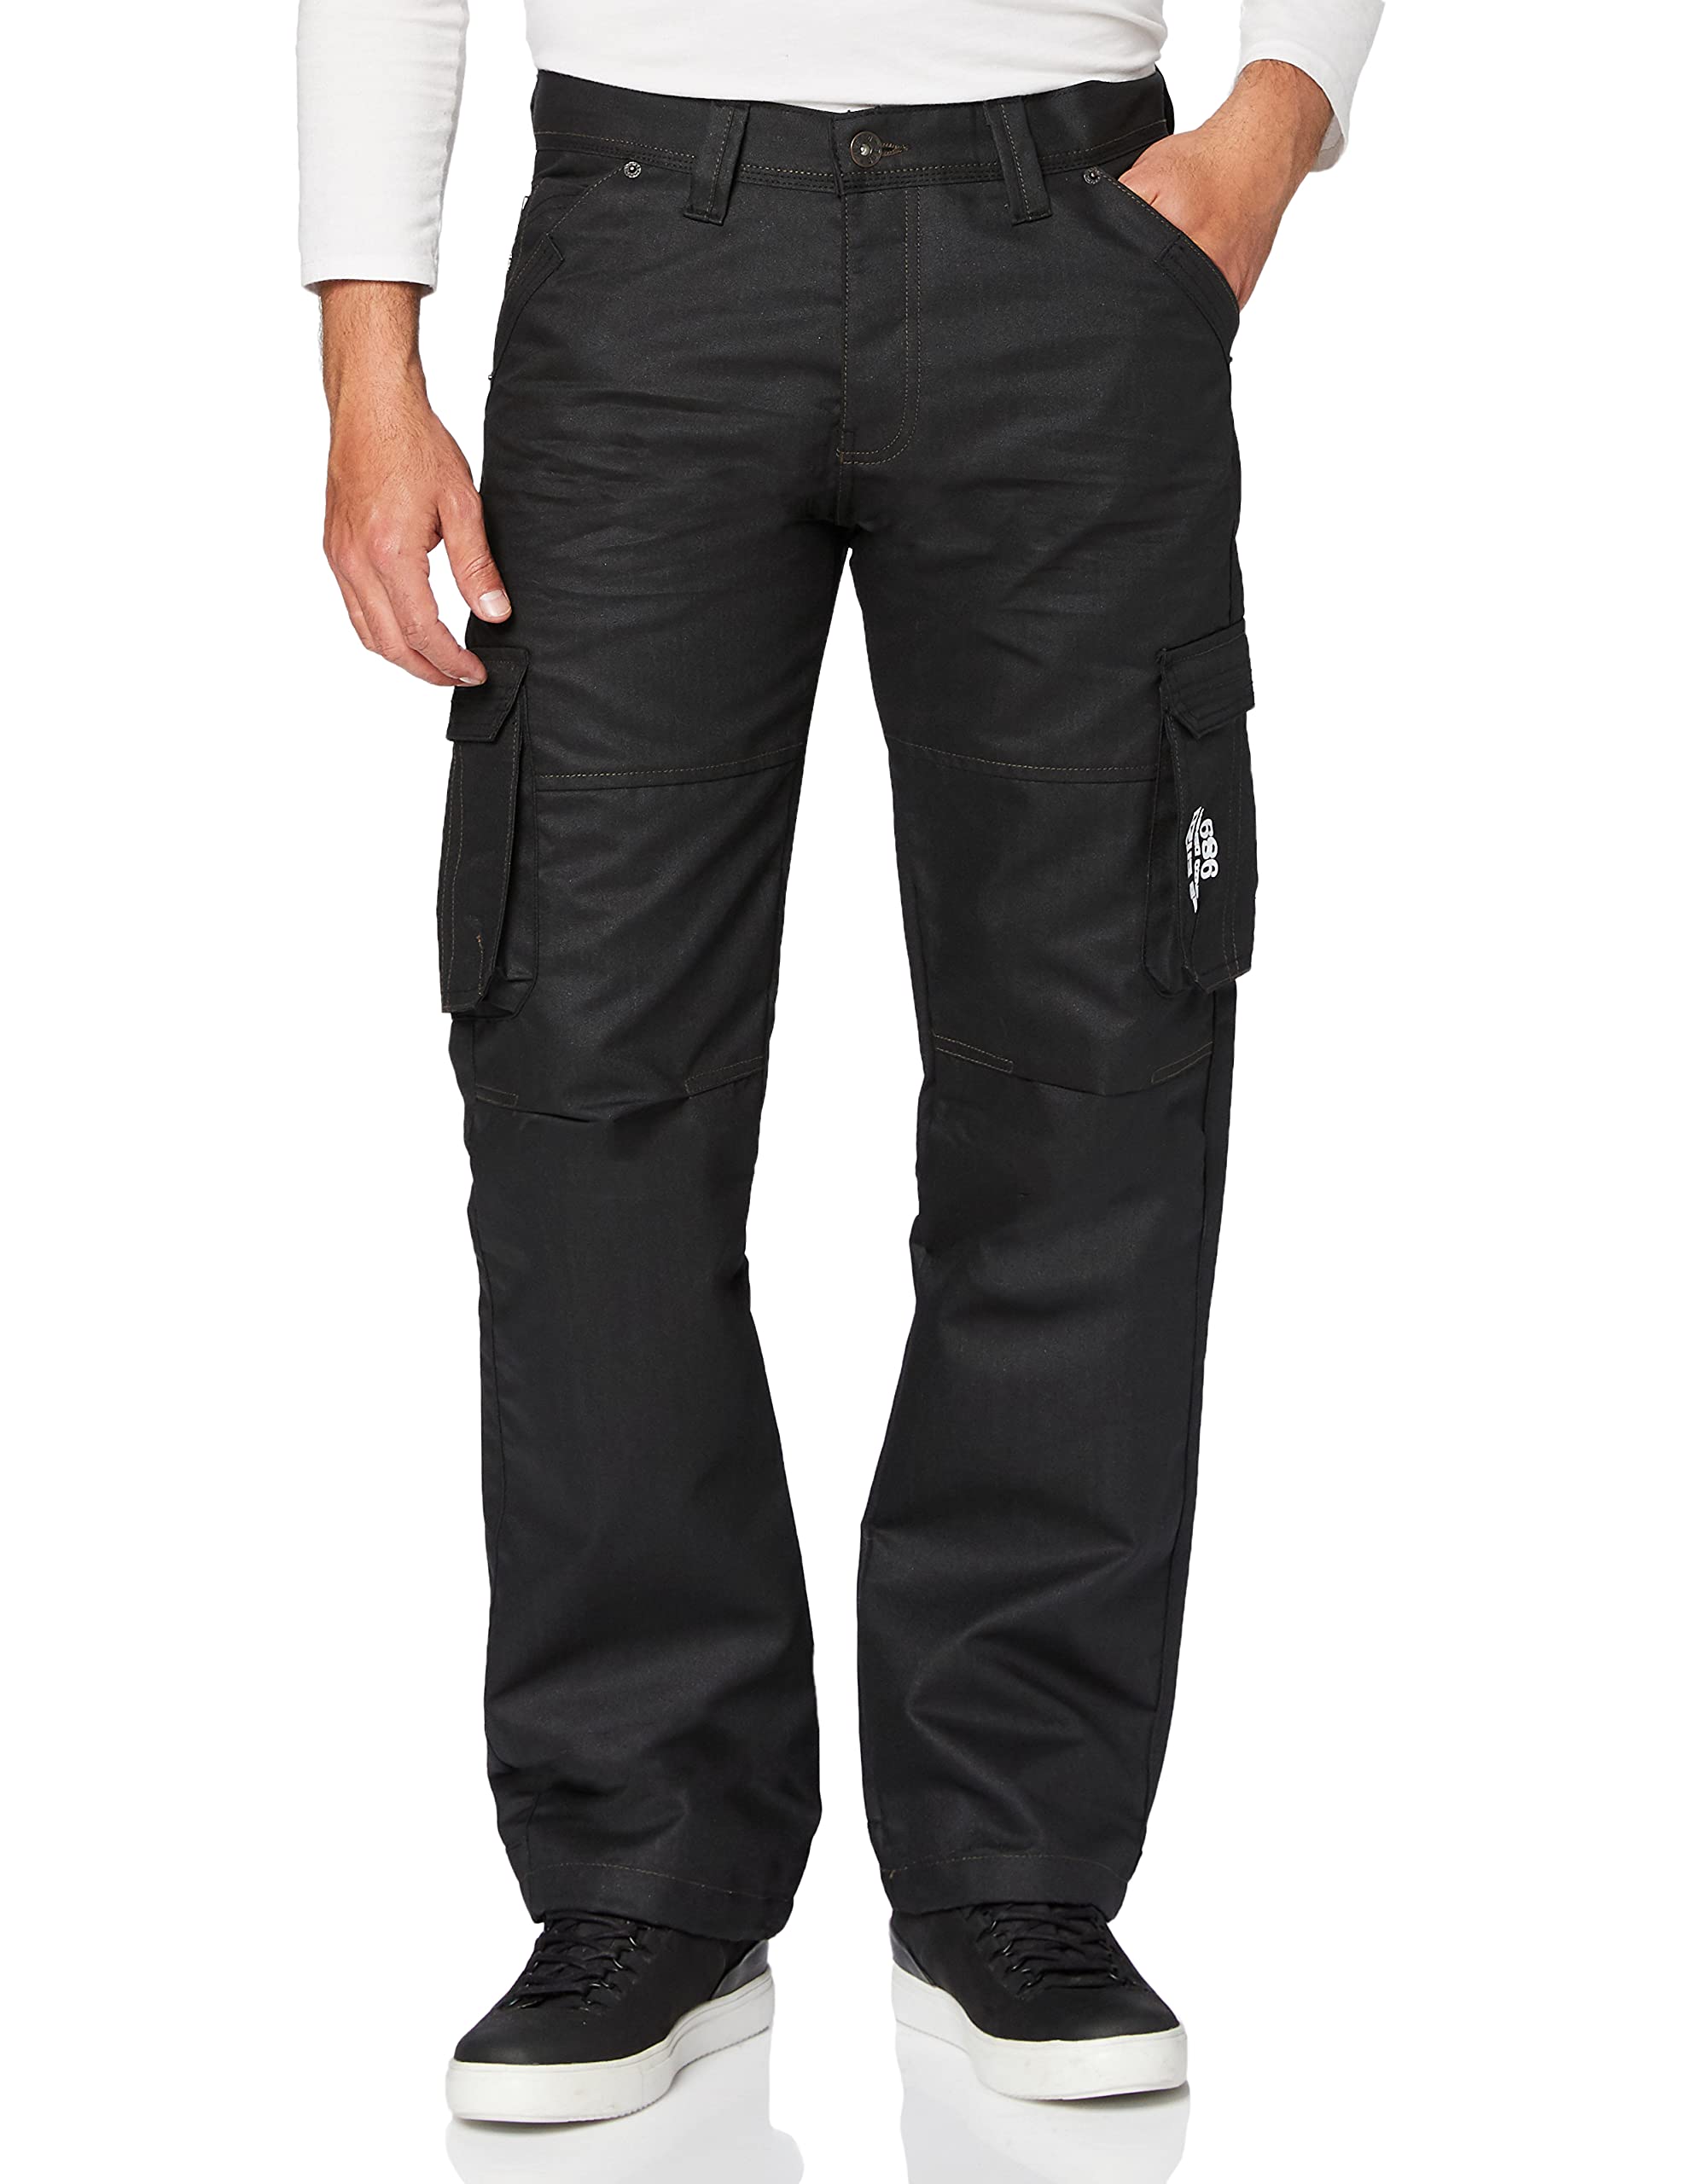 Enzo Herren Ez08 Blk Loose Fit Jeans, Schwarz (Black Black Coated), 34W / 32L